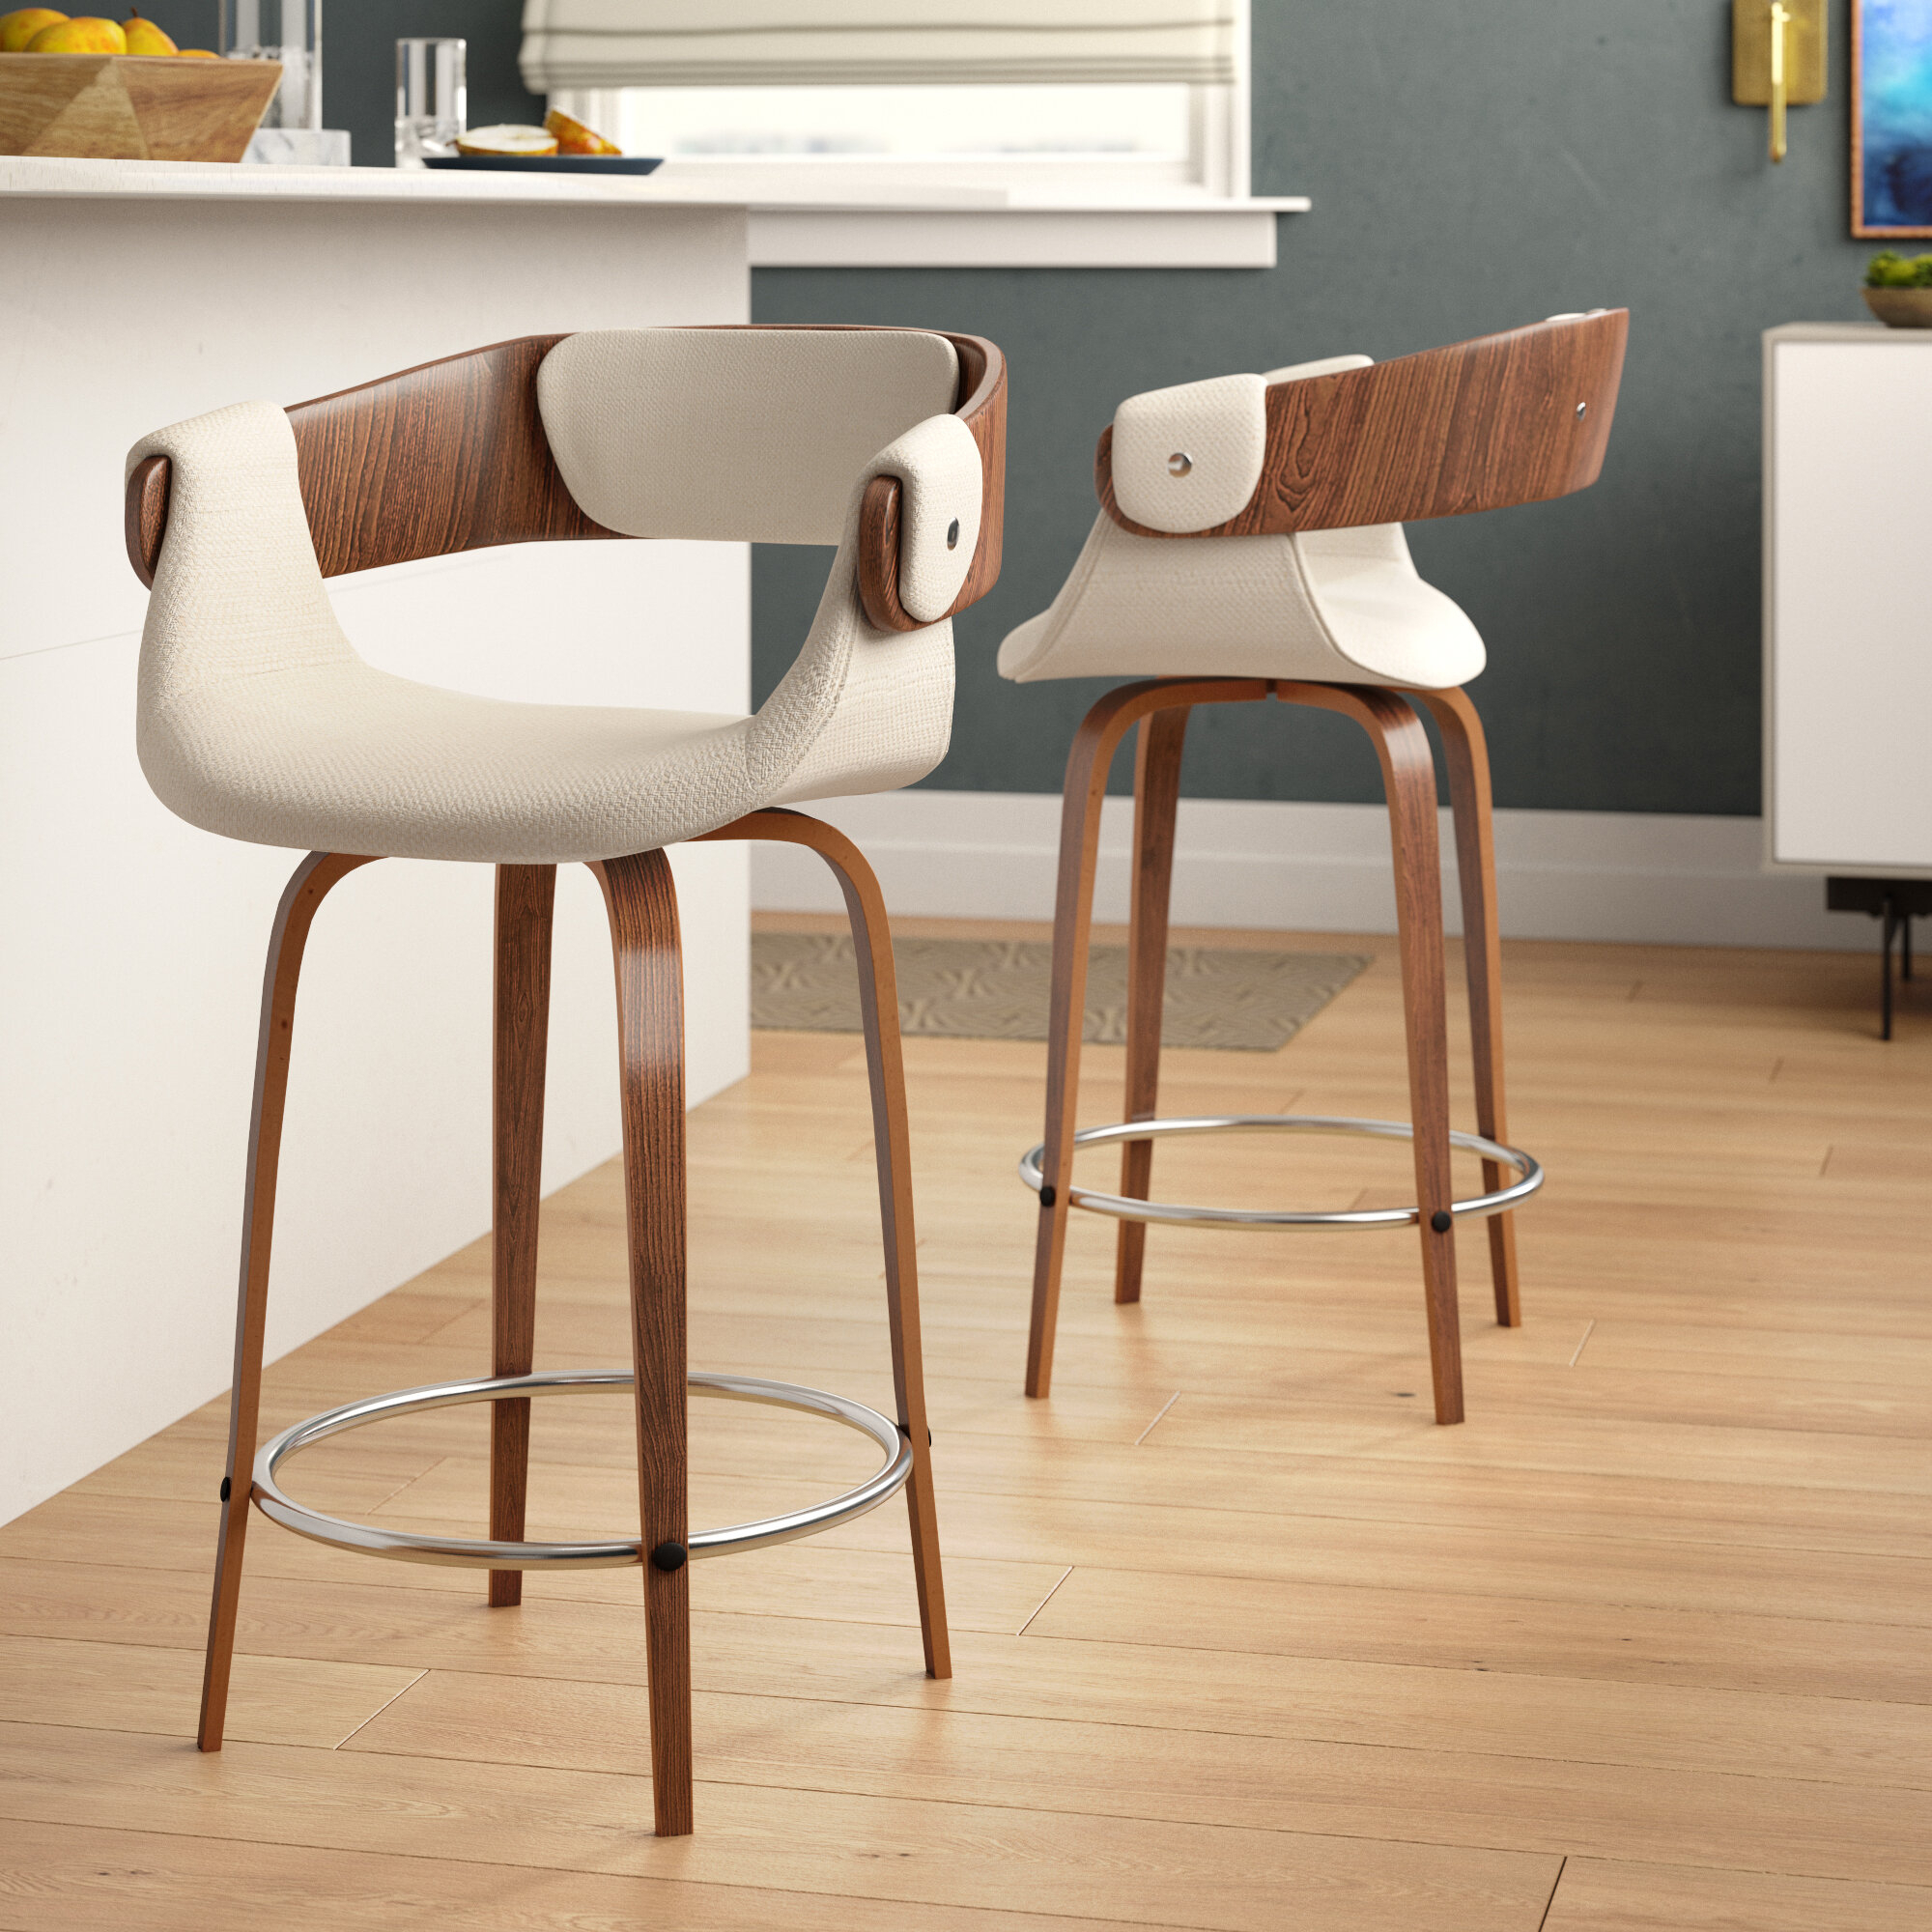 https://visualhunt.com/photos/title/5-expert-tips-to-choose-a-bar-stool.jpg